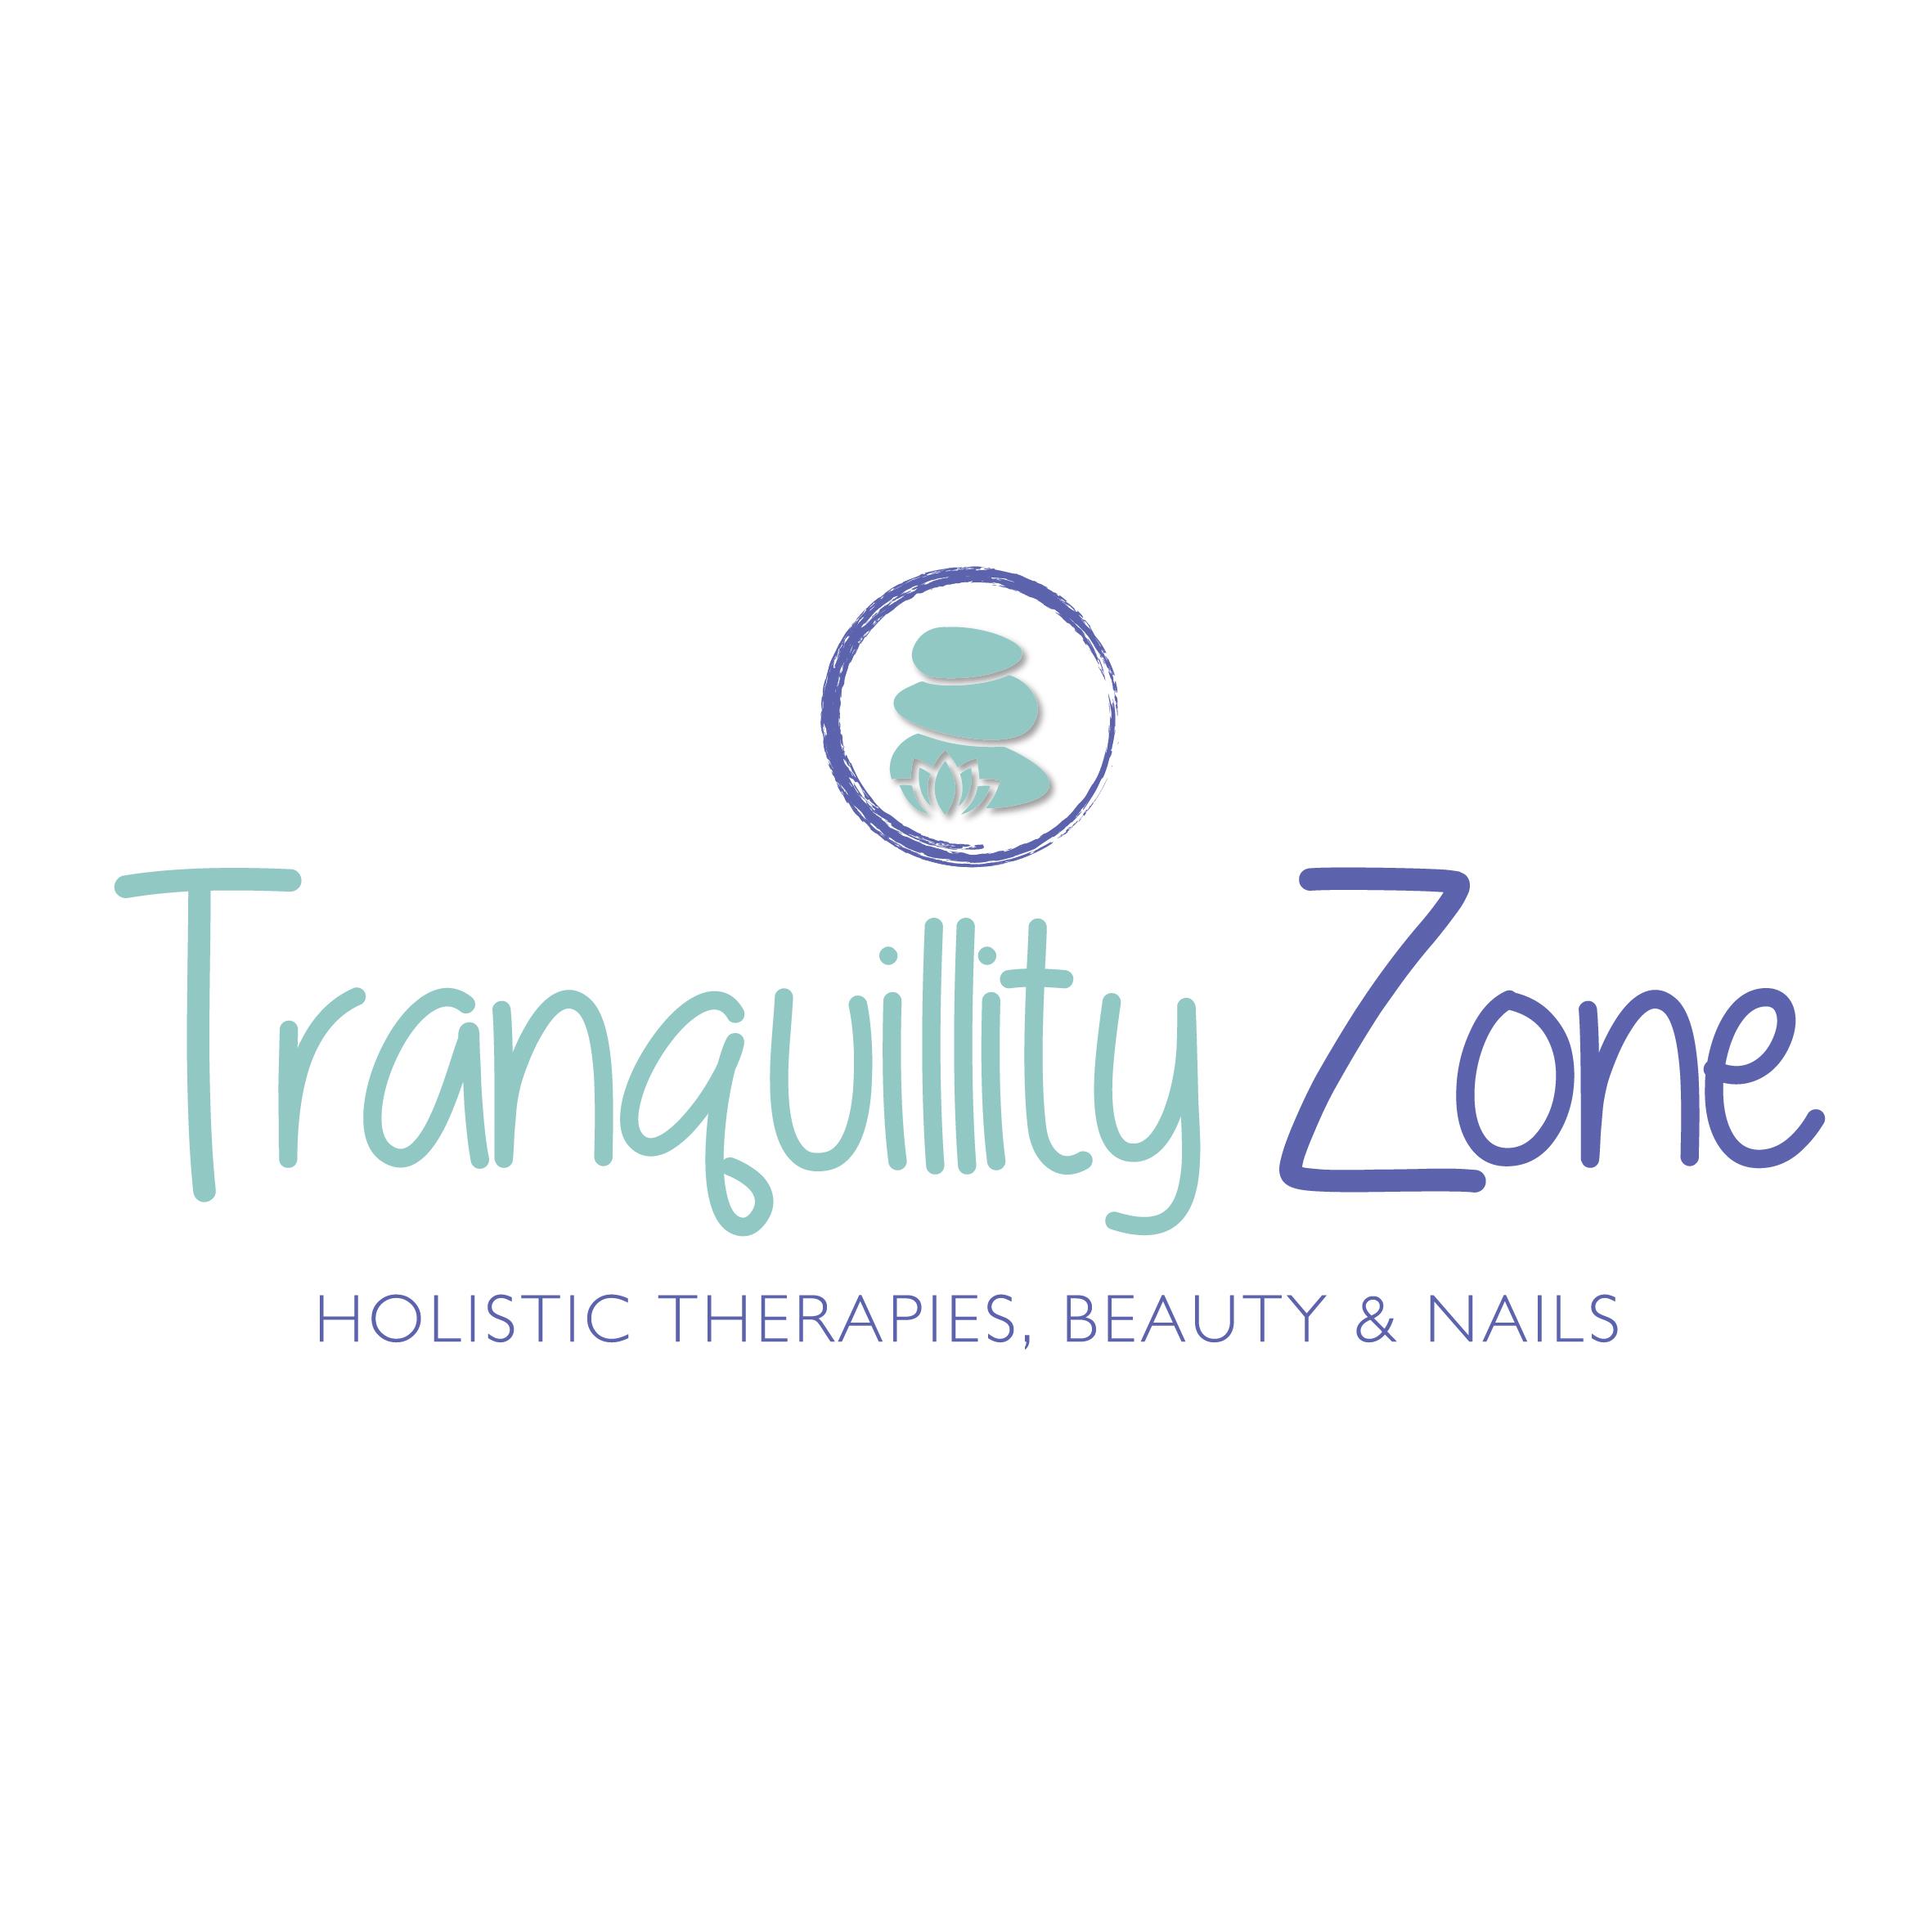 Tranquillity Zone